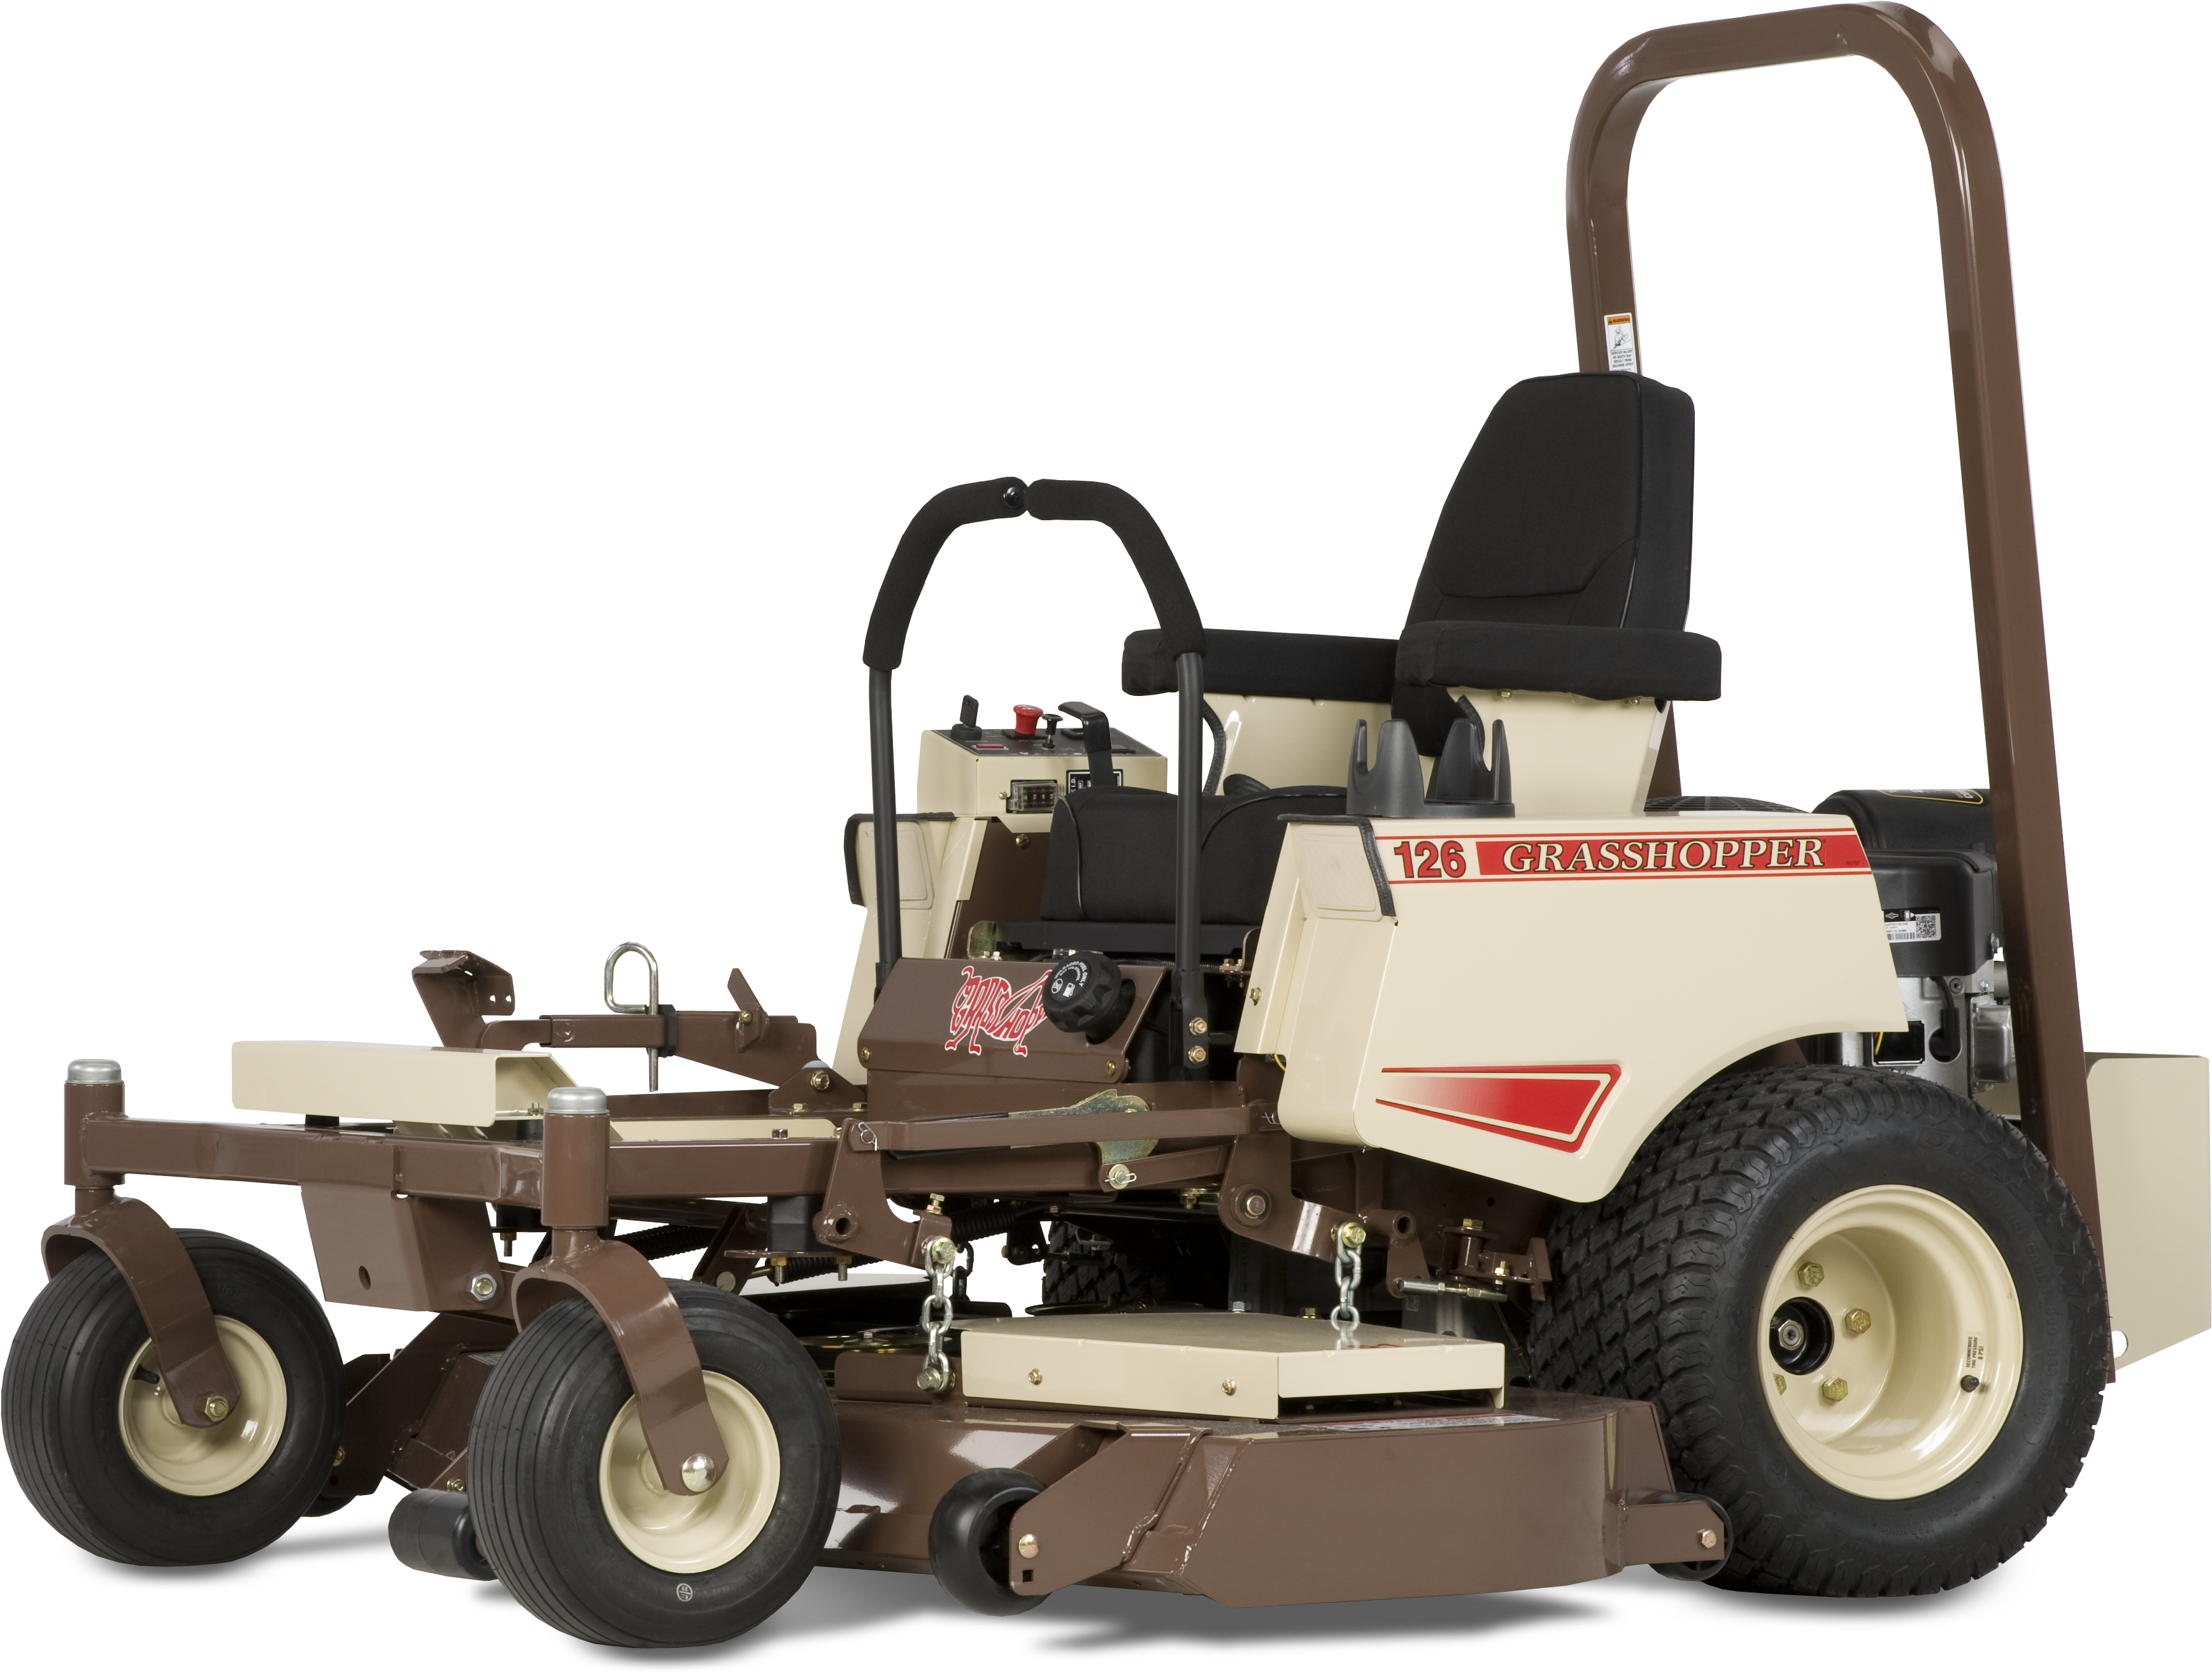 Zero Turn Mower - Grasshopper Zero Turn Lawn Mower (4256x2832)